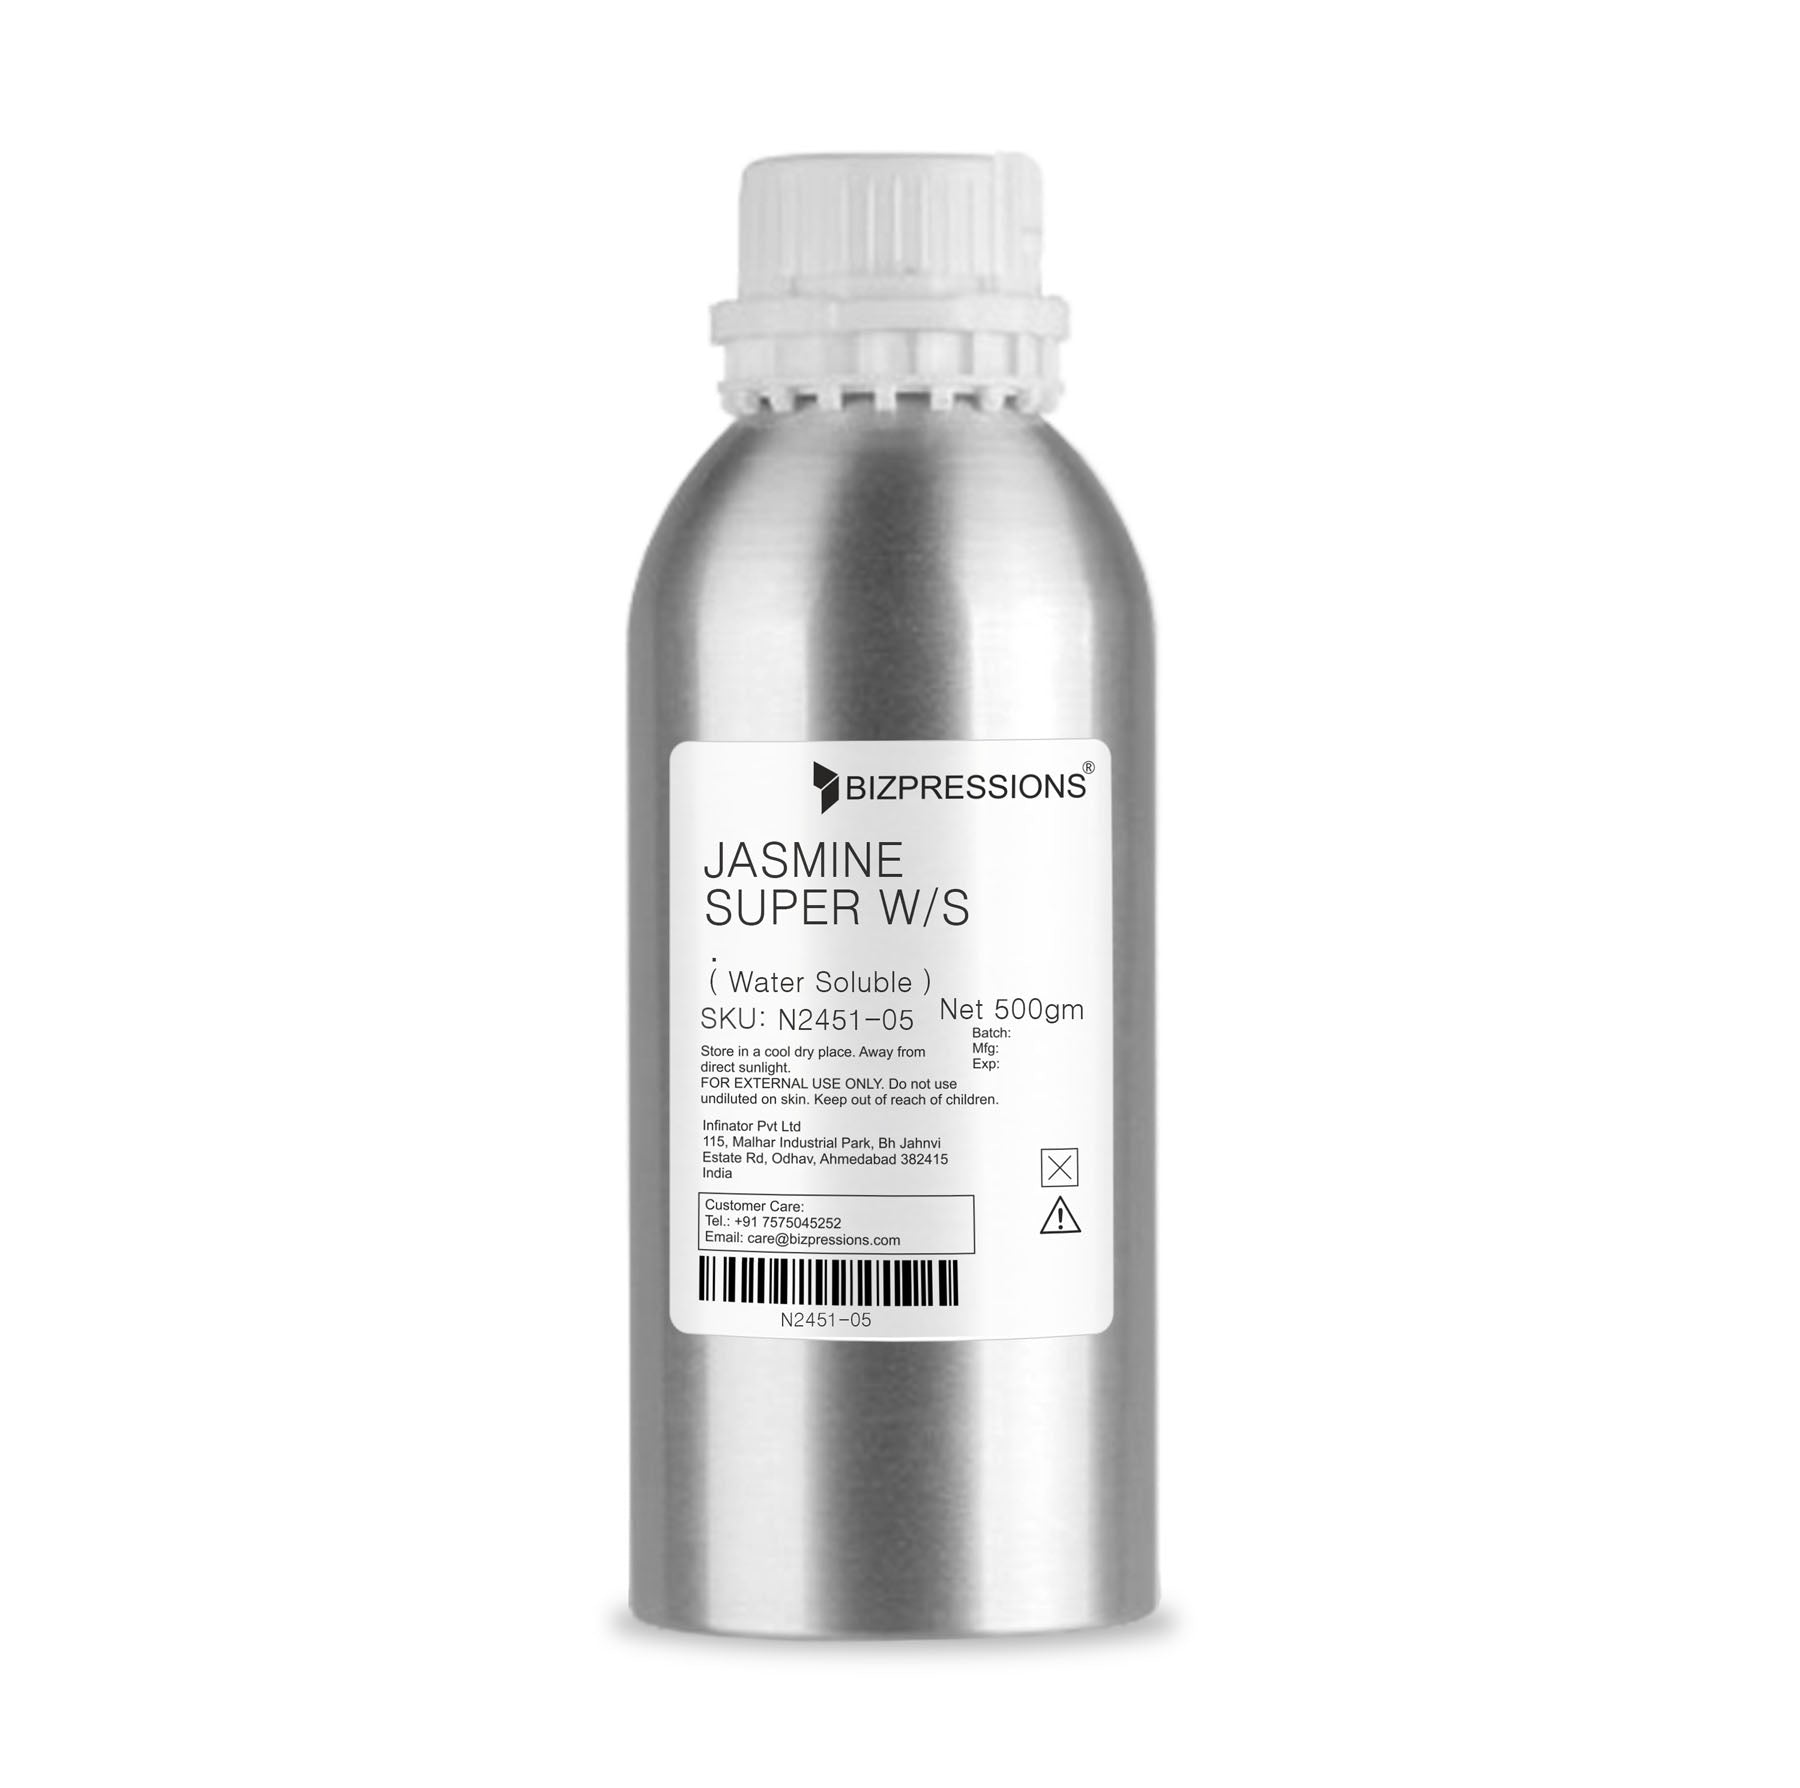 JASMINE SUPER W/S - Fragrance ( Water Soluble ) - 500 gm